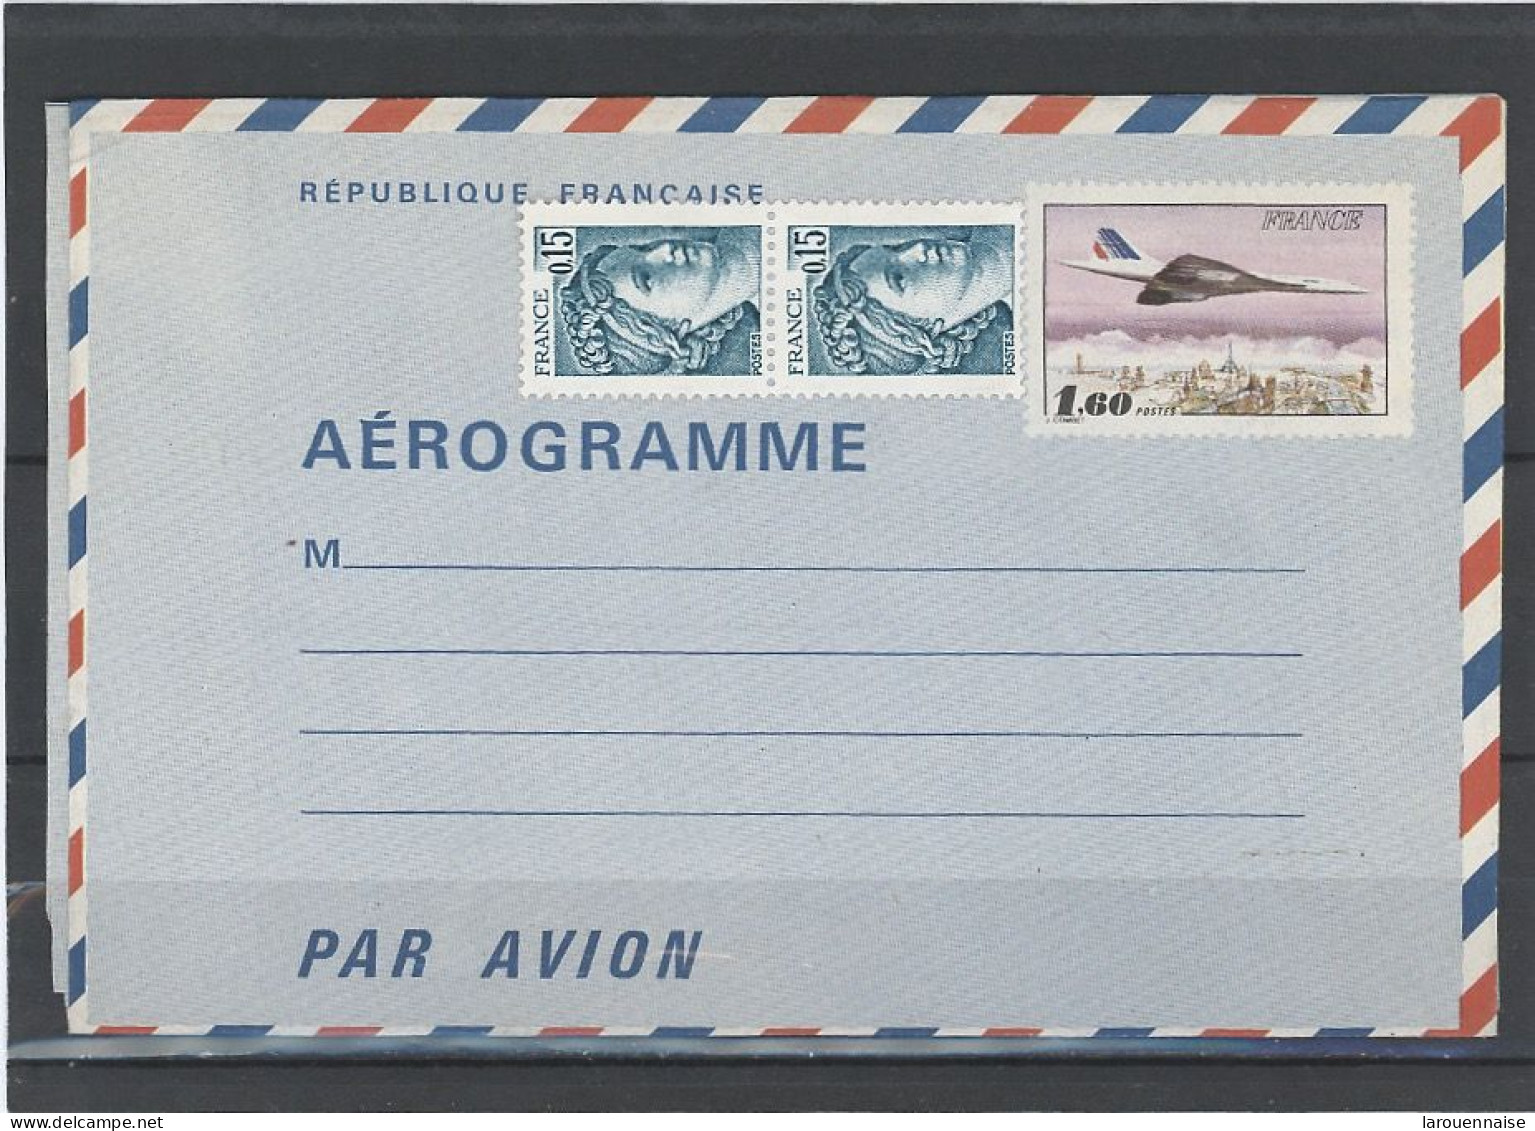 AEROGRAMME -N°1004 -AER   + 1966 X2  - 0,30F NOUVEAU TARIF -CONCORDE -1,60 F - Aérogrammes